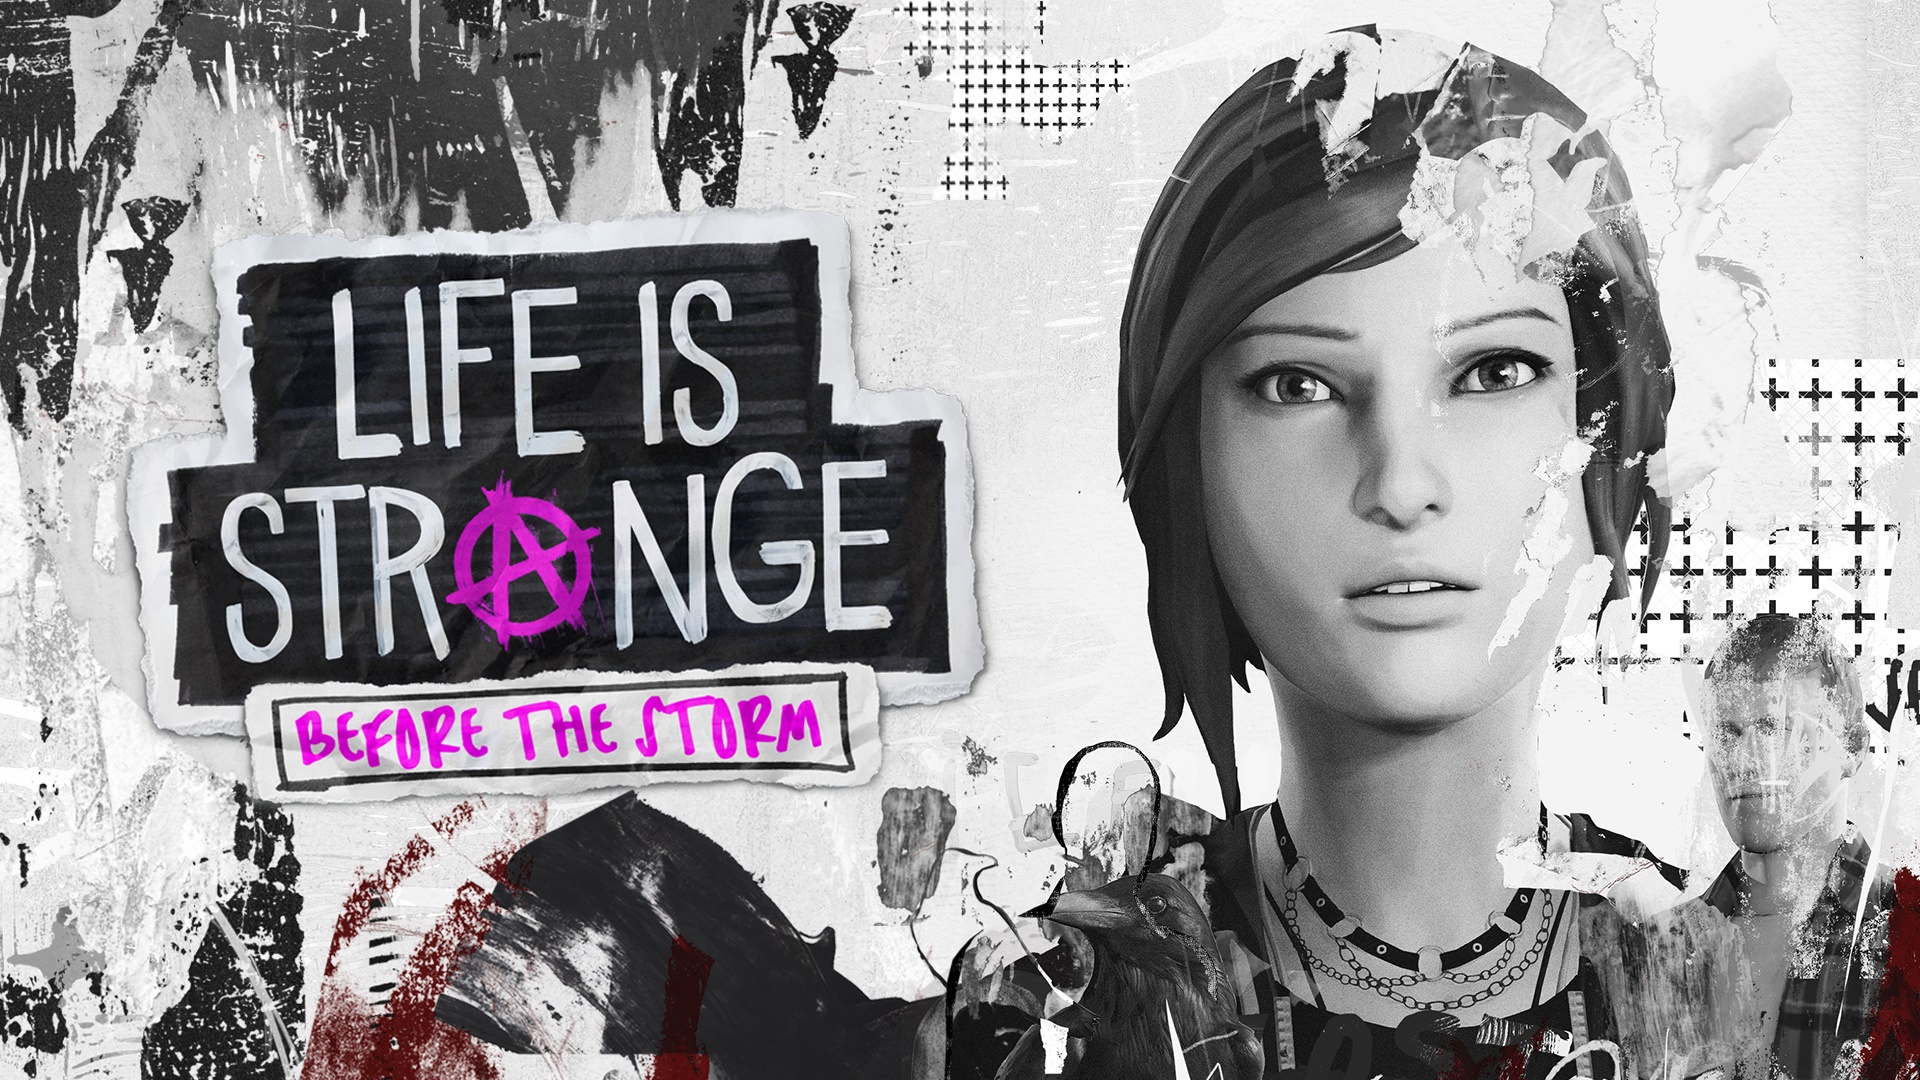 El Episodio 3 de Life is Strange: Before the Storm disponible el 20 de diciembre